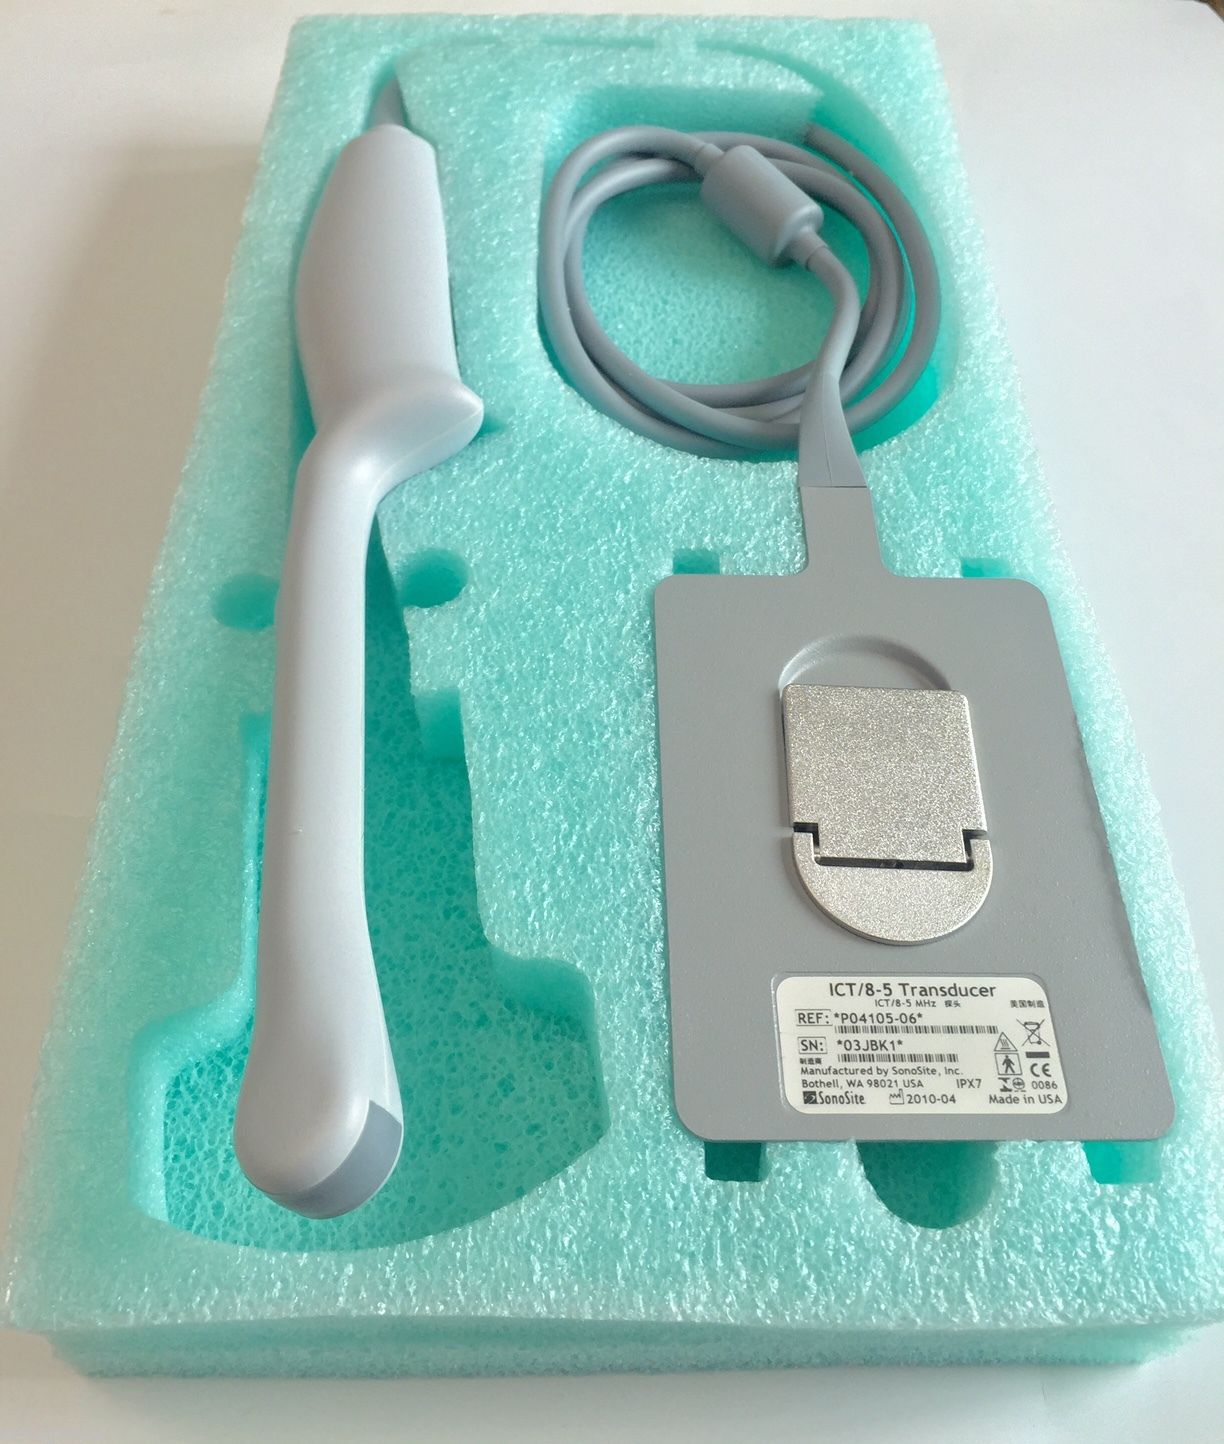 SonoSite TITAN ICT/8-5 MHz.Gynecology ULTRASOUND PROBE " NEW "REF# P04105-06 DIAGNOSTIC ULTRASOUND MACHINES FOR SALE